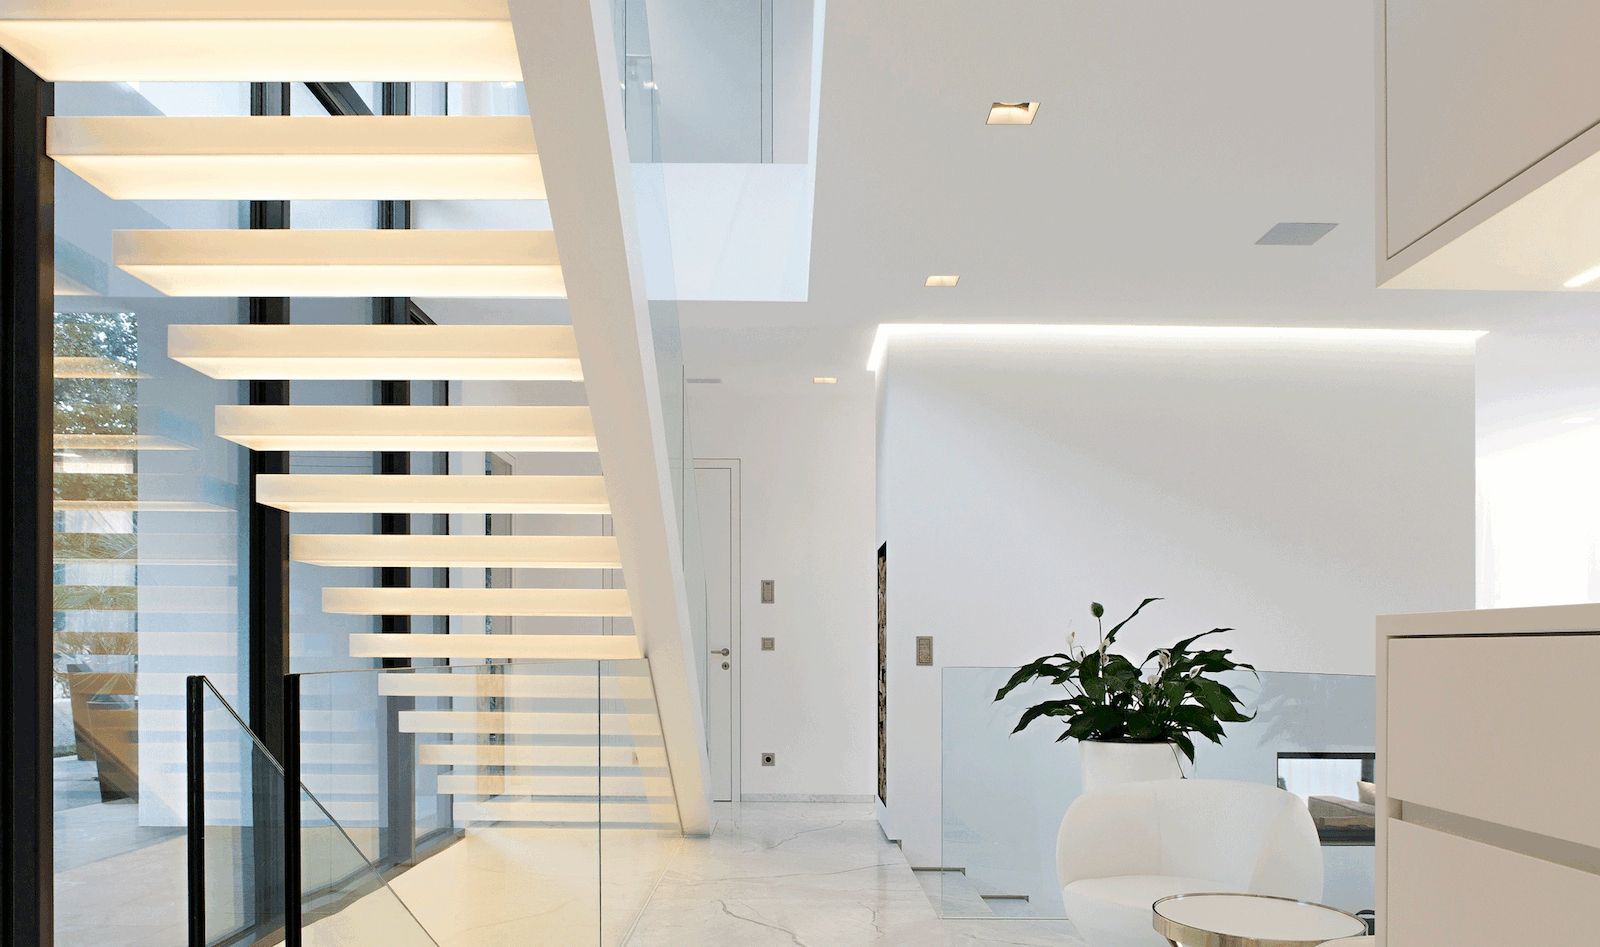 Casa M, monovolume architecture + design monovolume architecture + design Corredores, halls e escadas modernos